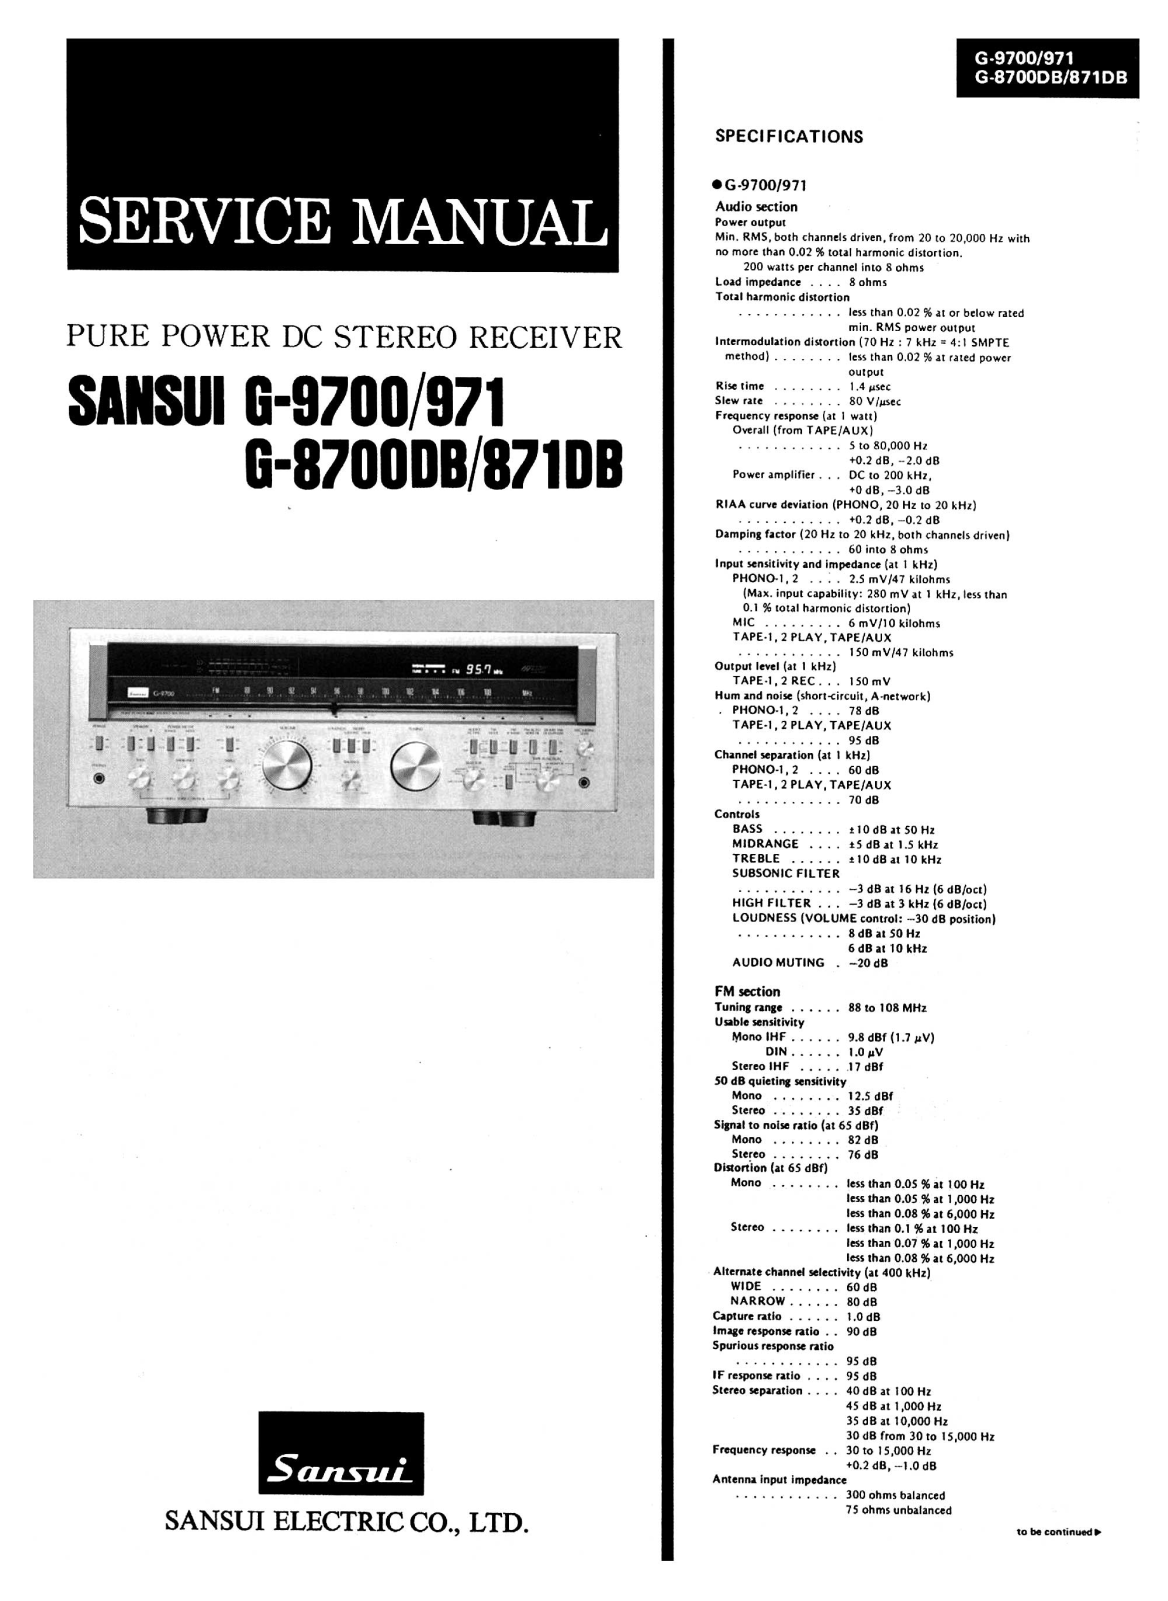 Sansui G-8700-DB Service manual